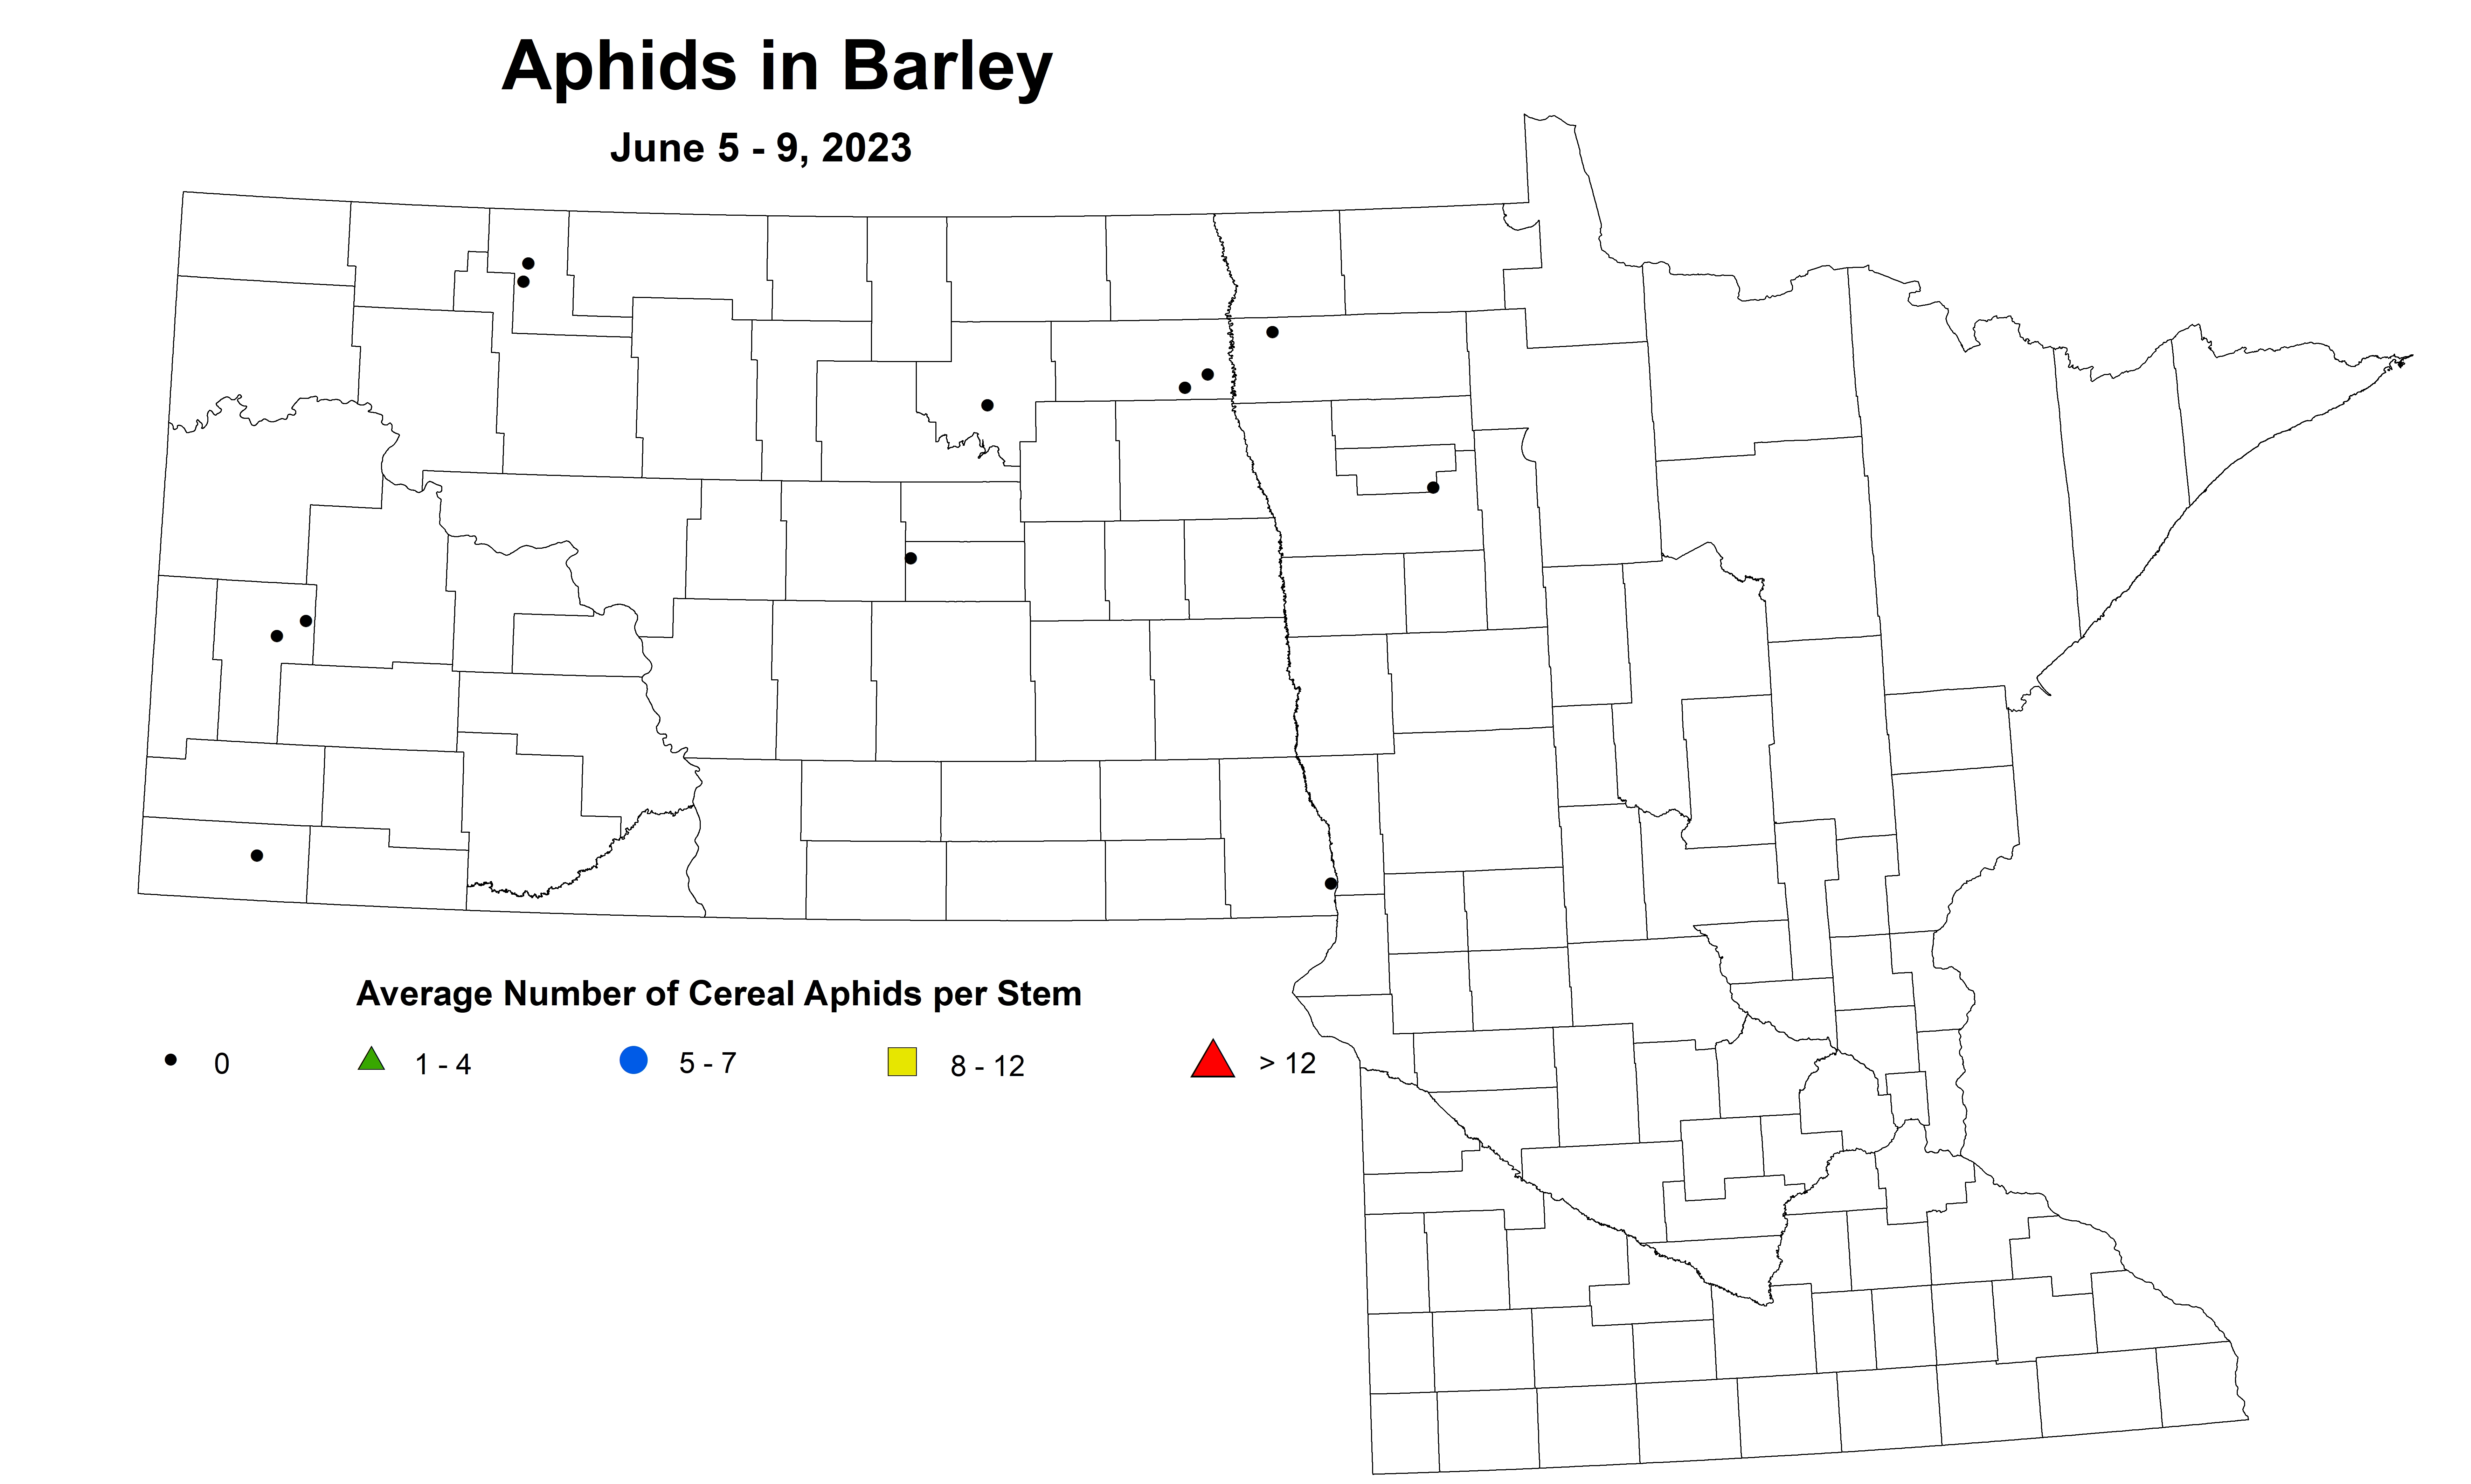 barley aphids June 5-9 2023